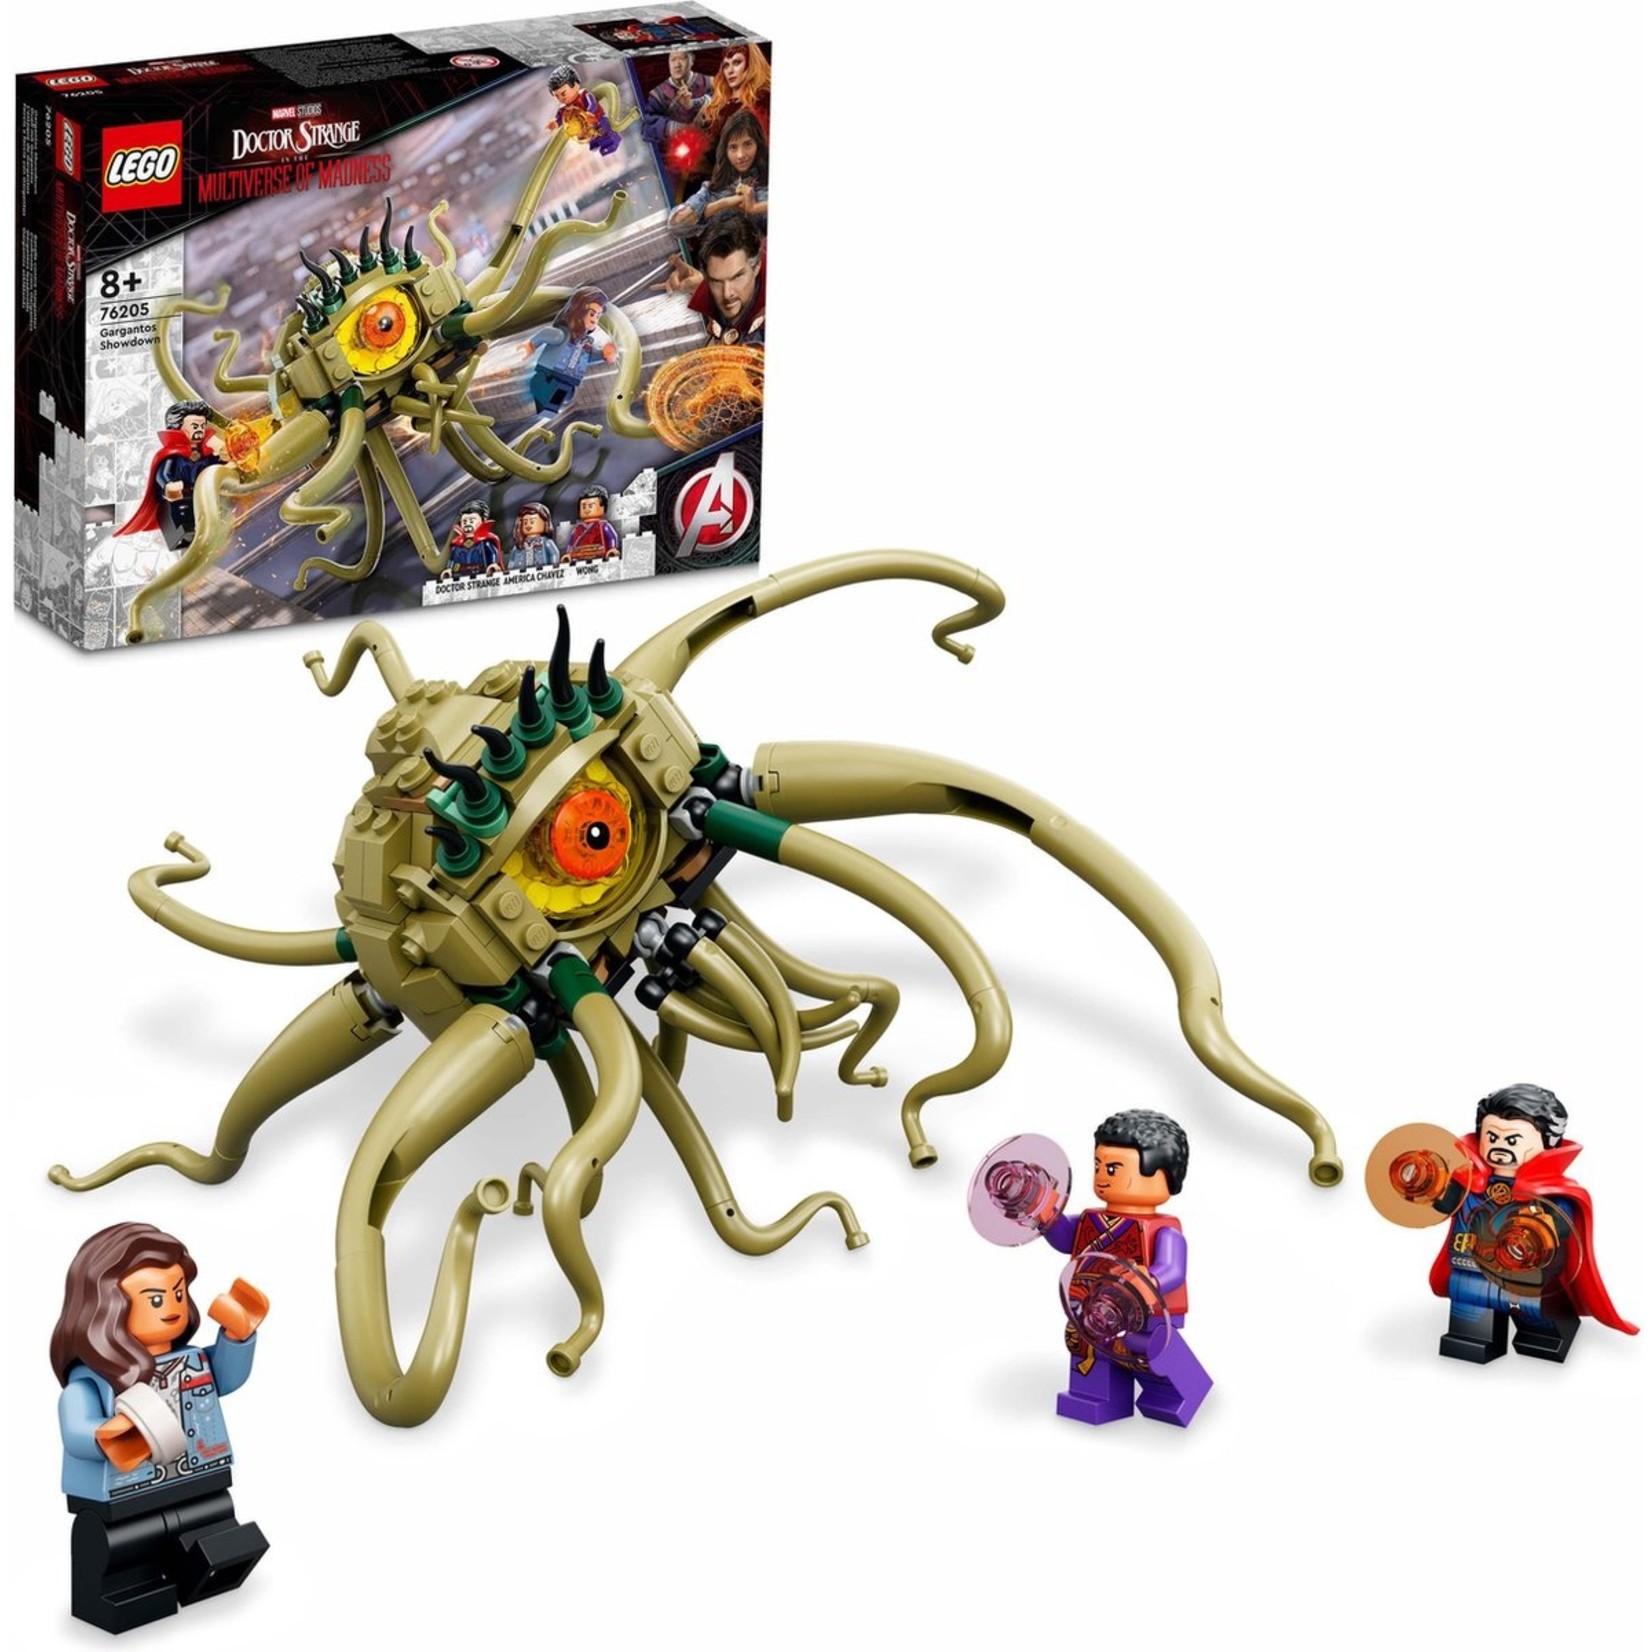 LEGO LEGO Doctor Strange in the Multiverse of Madness Gargantos Showdown (76205)